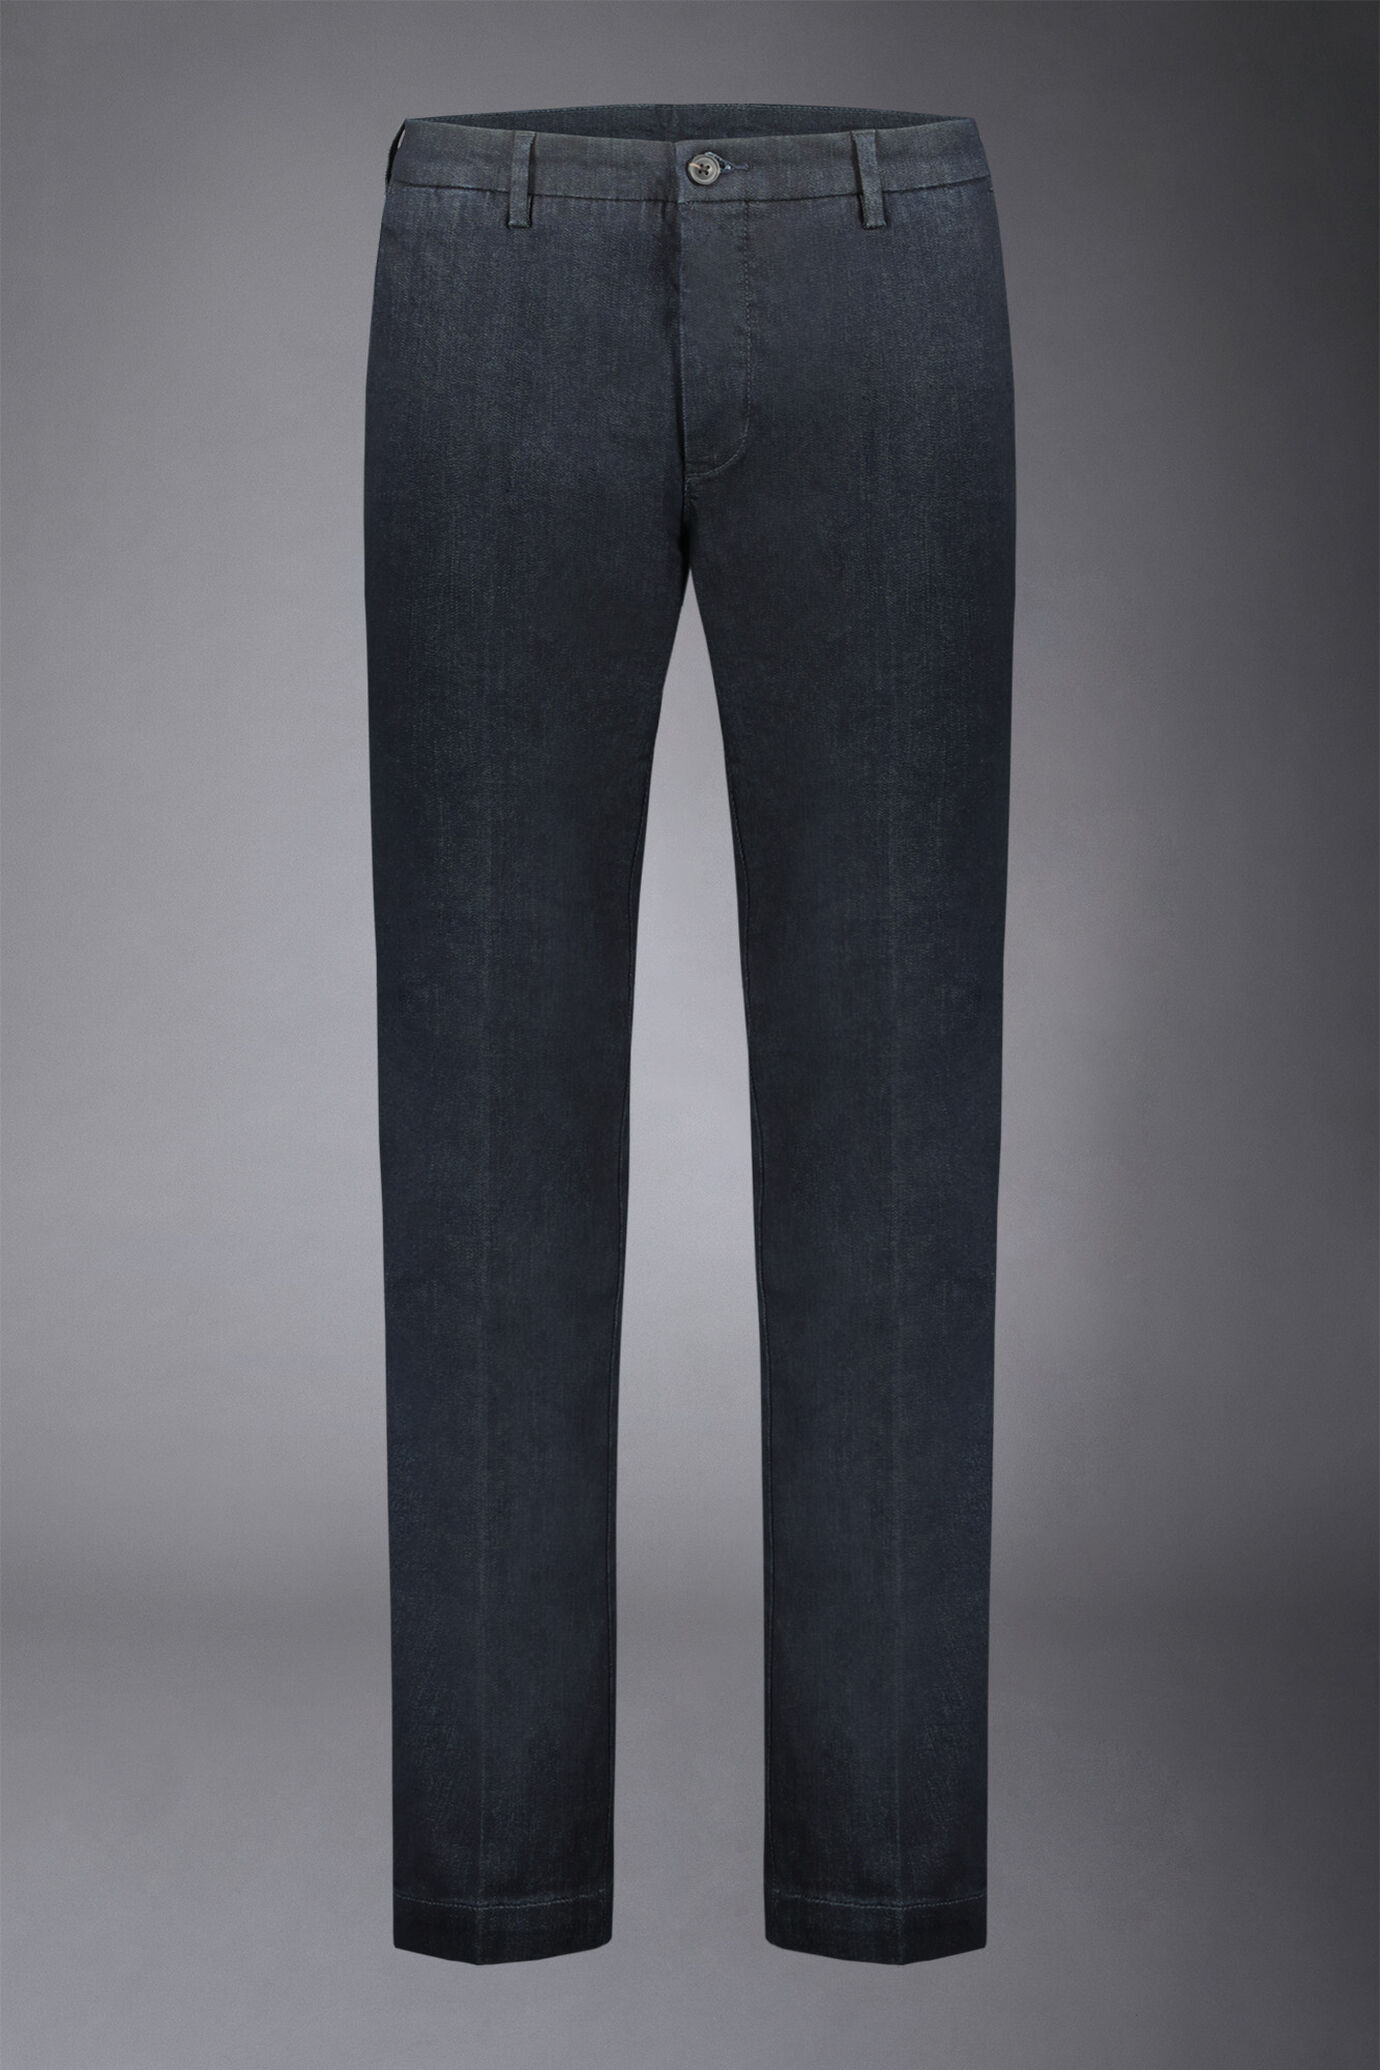 Pantalone chino uomo tessuto denim leggermente elasticizzato regular fit image number 4